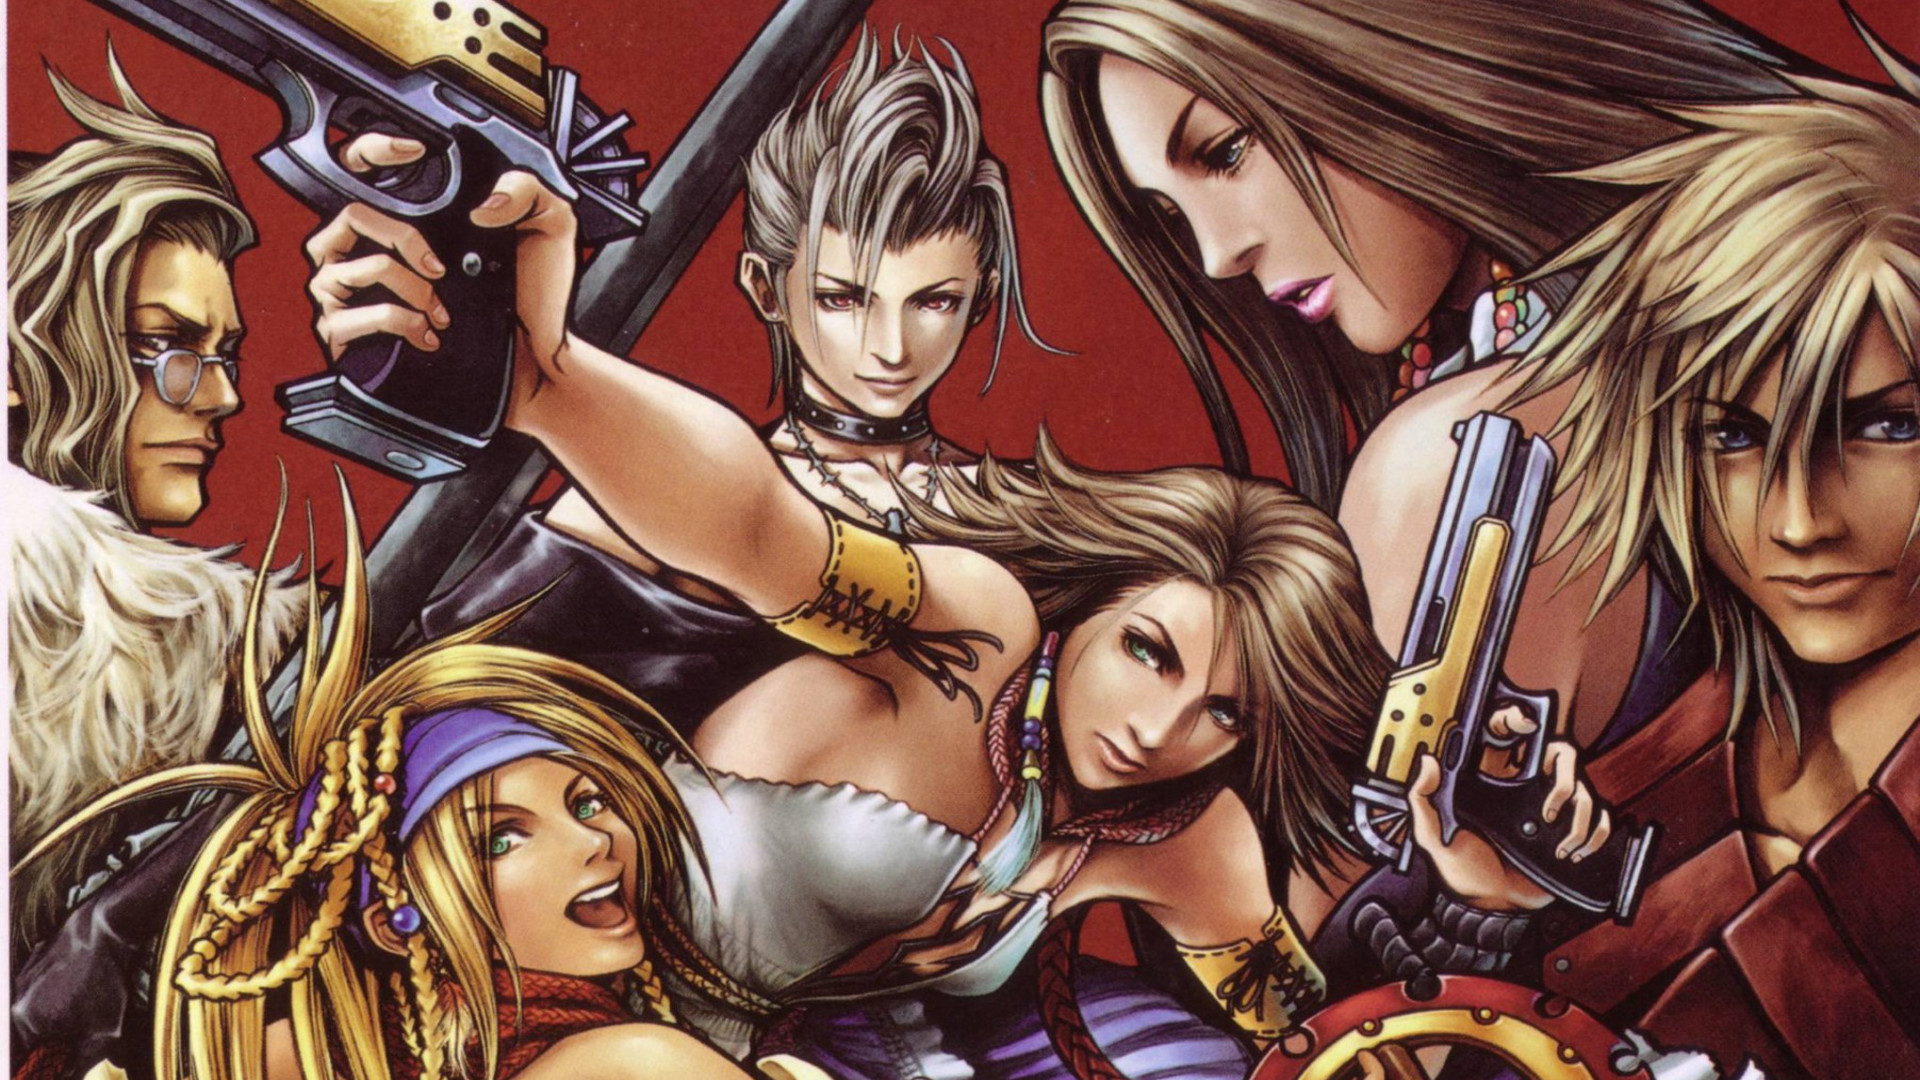  Final Fantasy X  X 2 HD Remaster  Details LaunchBox 